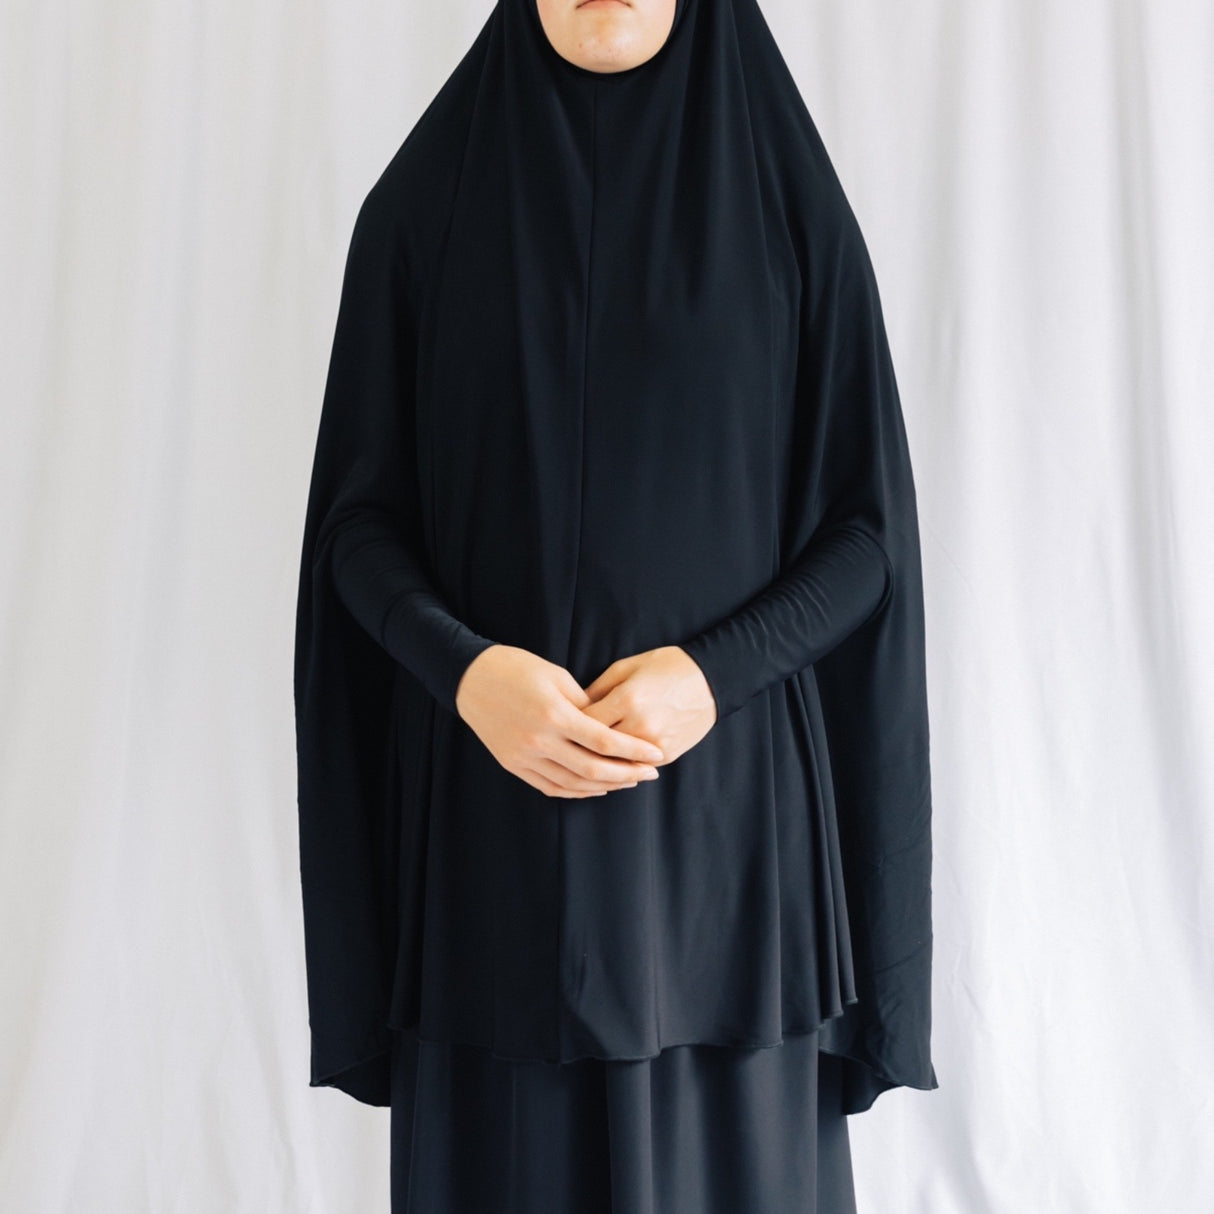 Premium Jilbab Sleeved Black